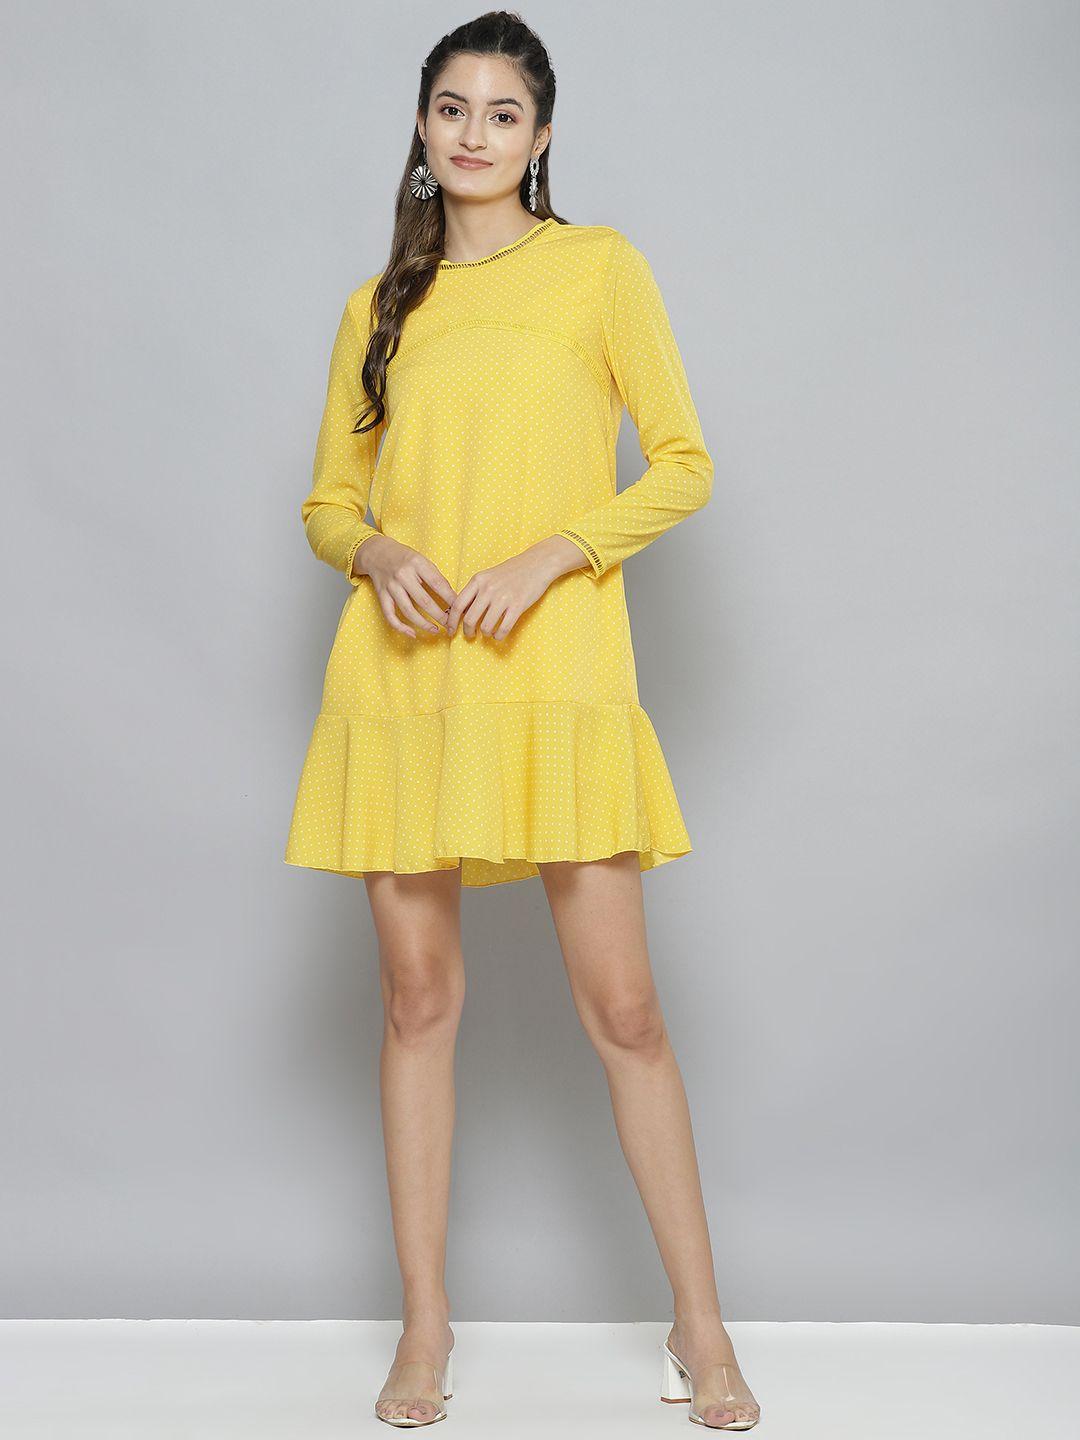 sassafras yellow & white crepe a-line dress